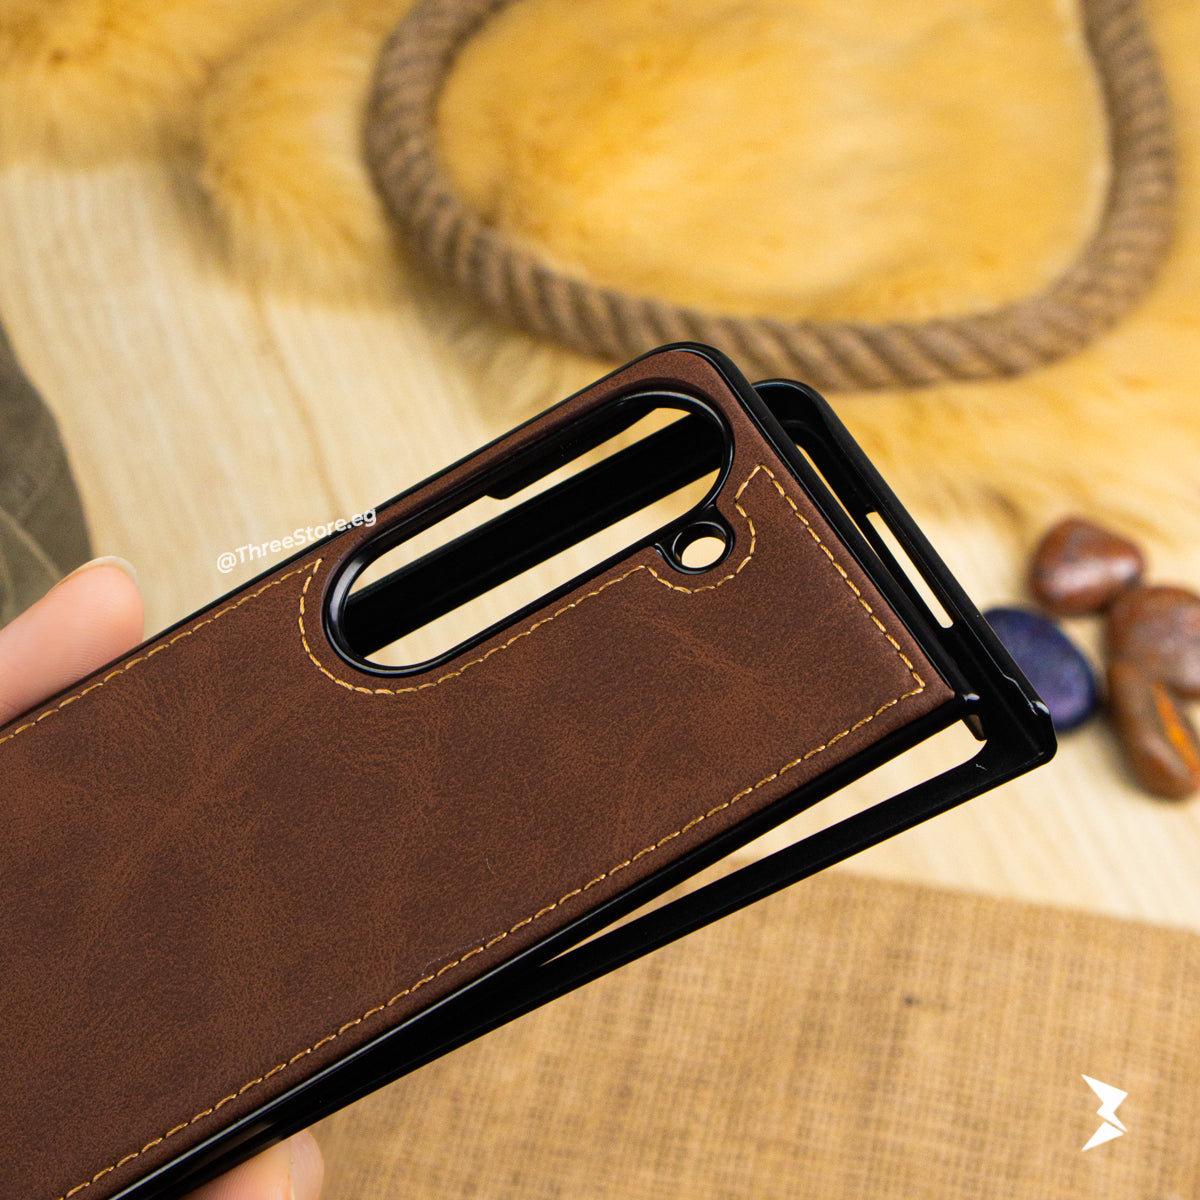 Puloka Handicrafts Leather Case Samsung Z Fold 5